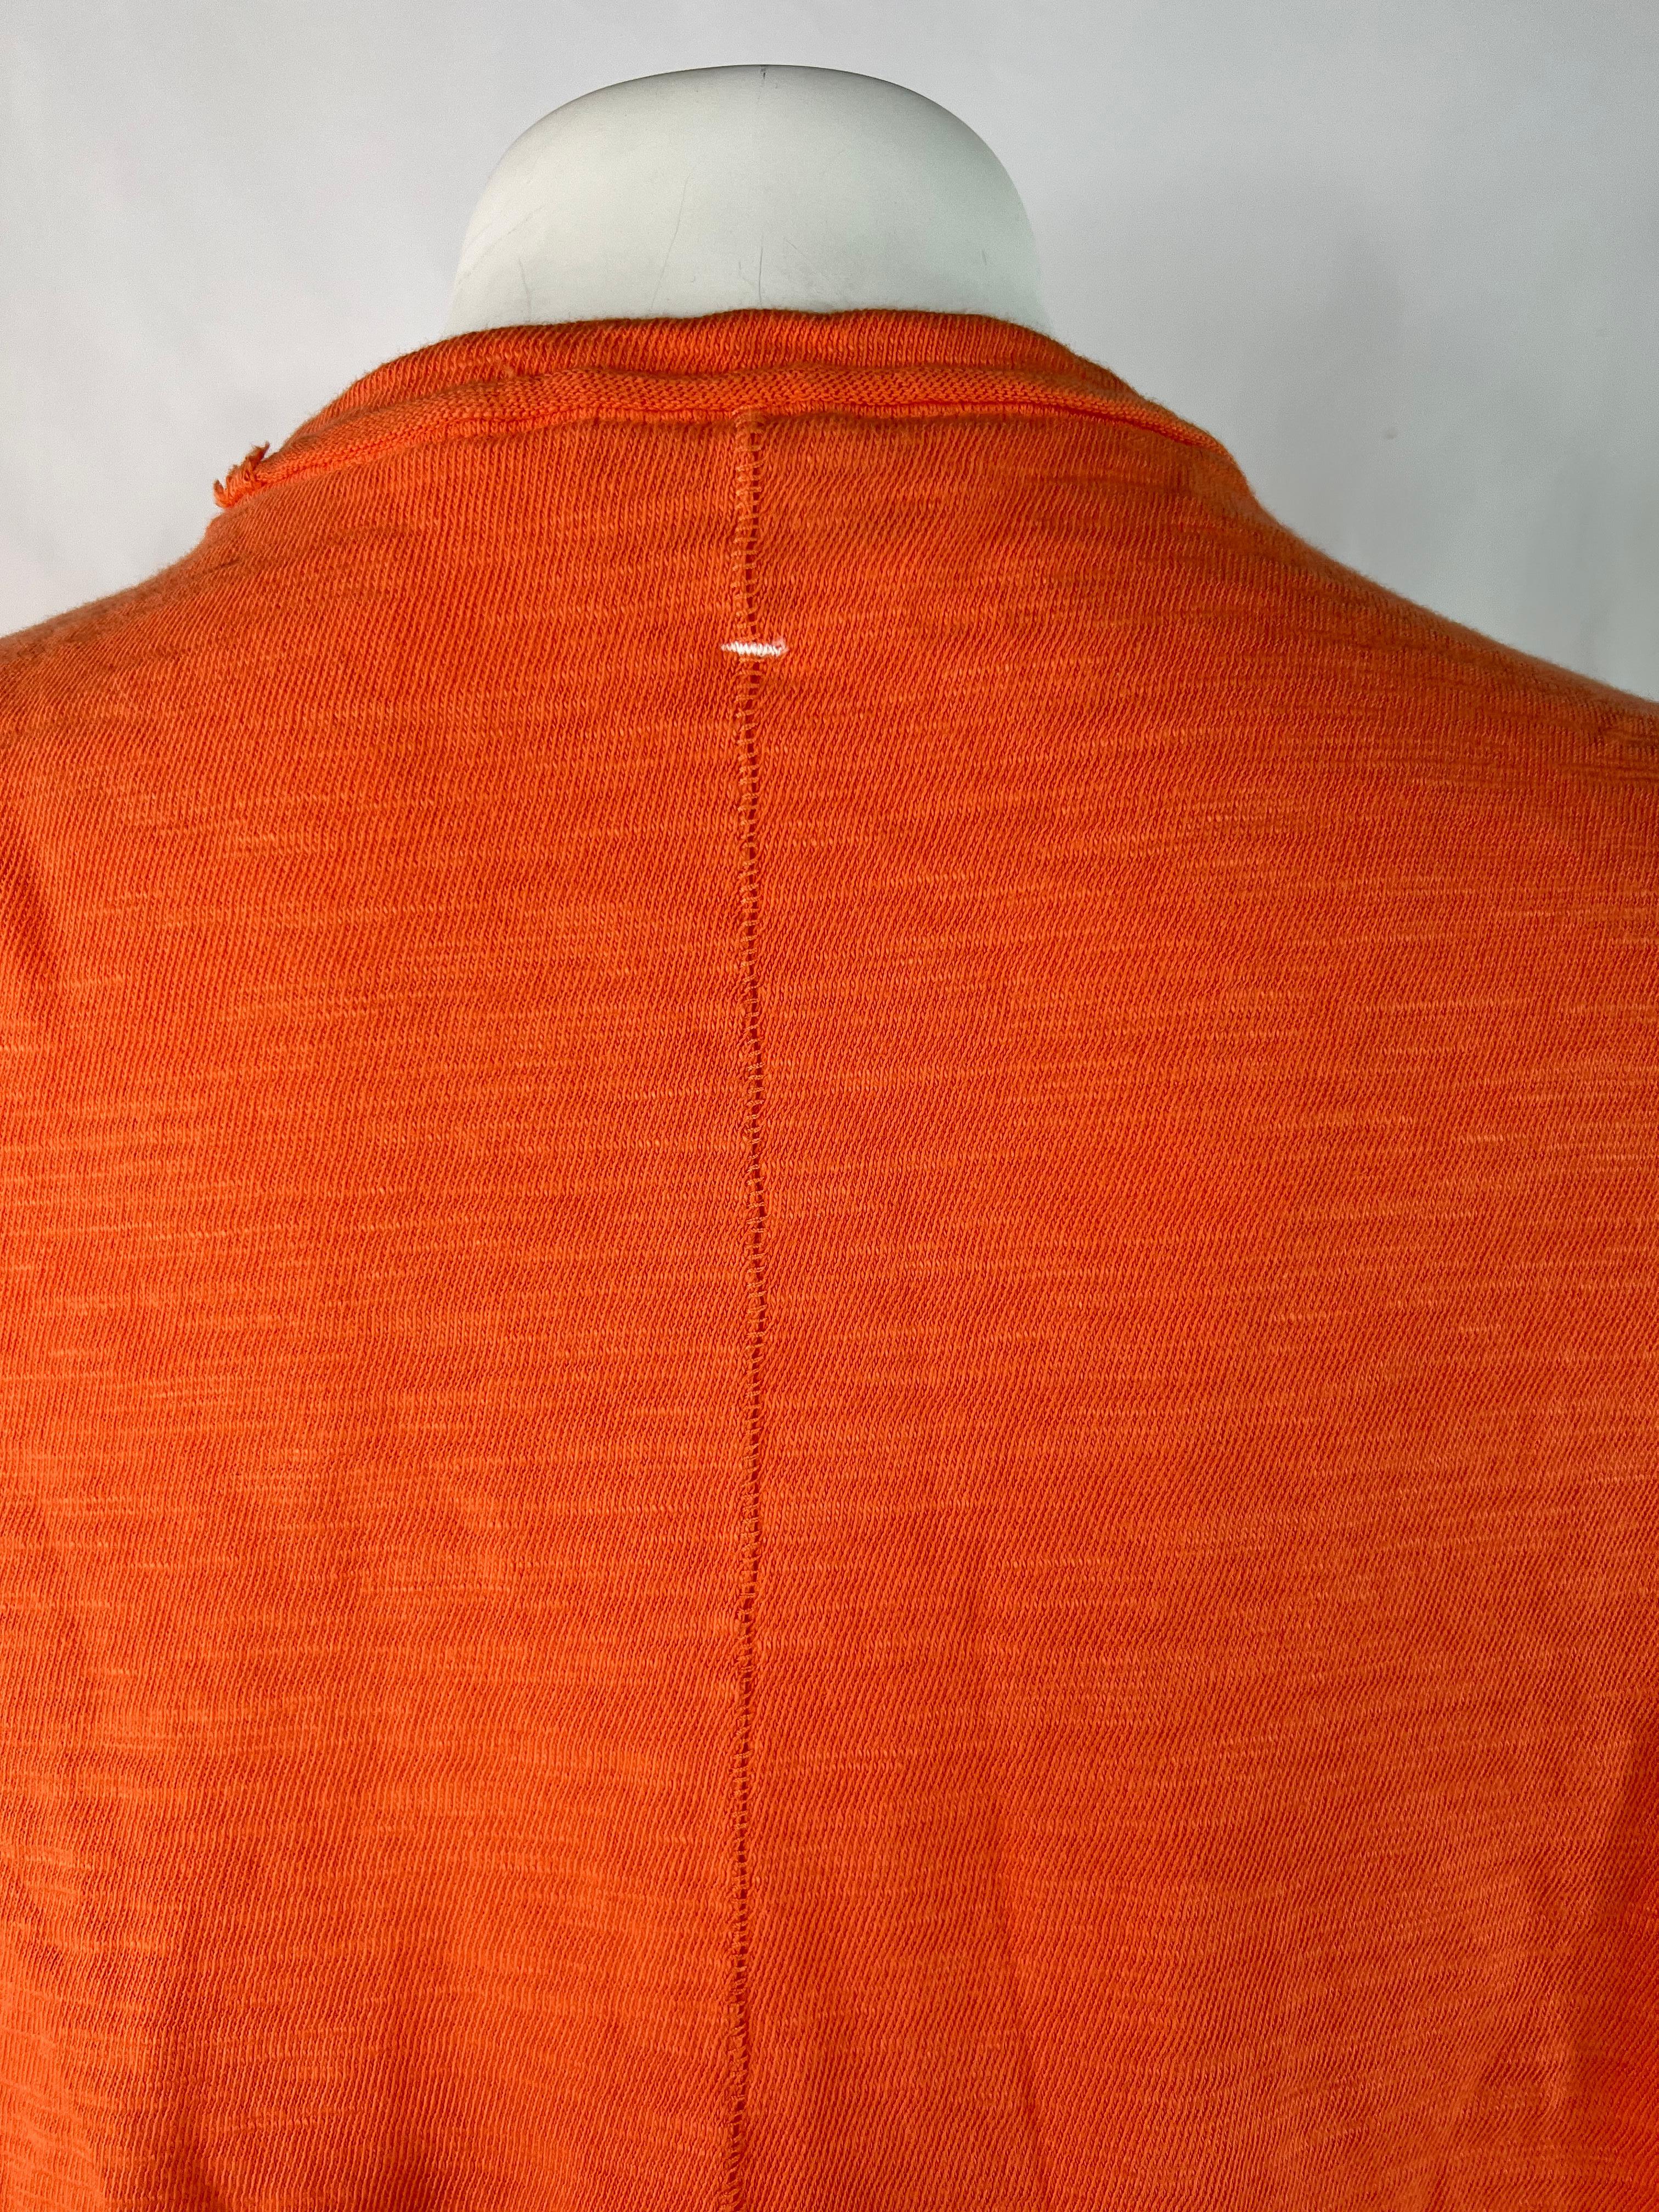 Rag and Bone OrangeCotton T- Shirt, Size XL For Sale 2